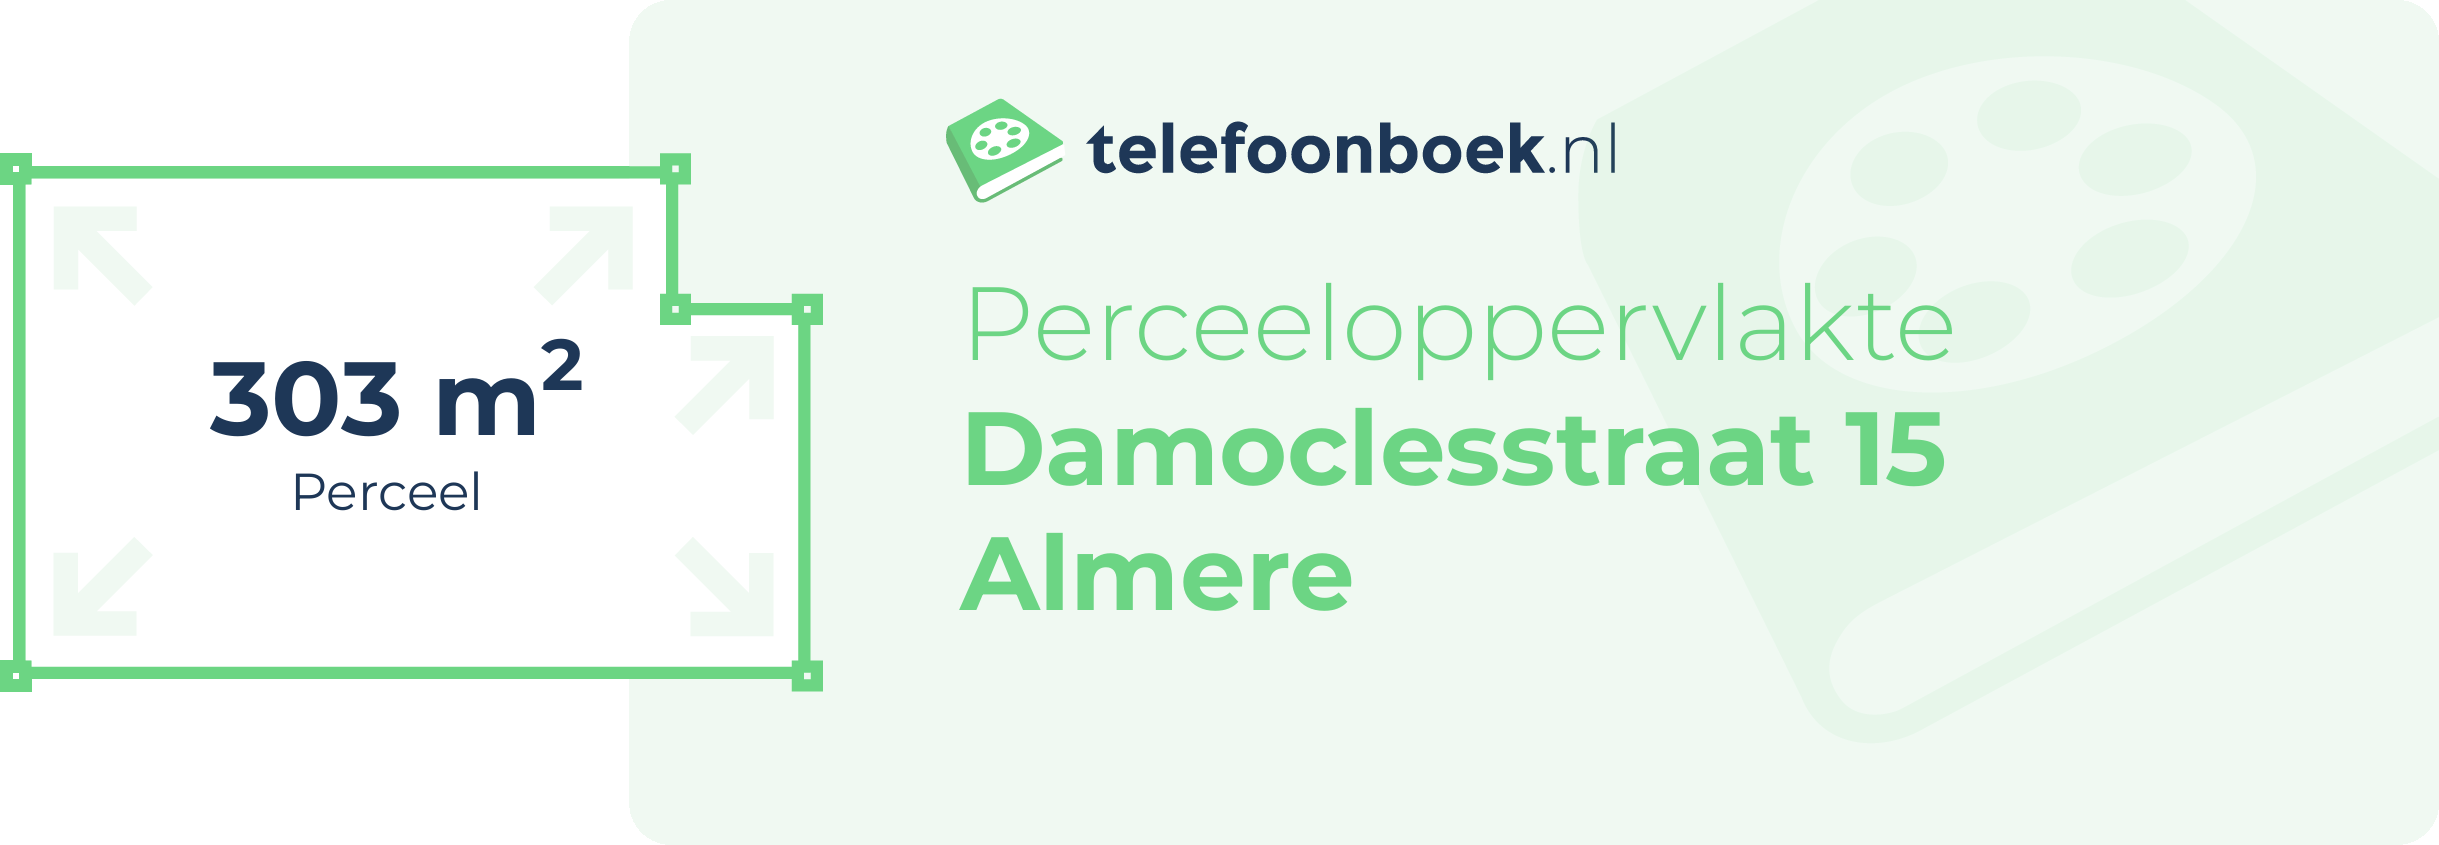 Perceeloppervlakte Damoclesstraat 15 Almere